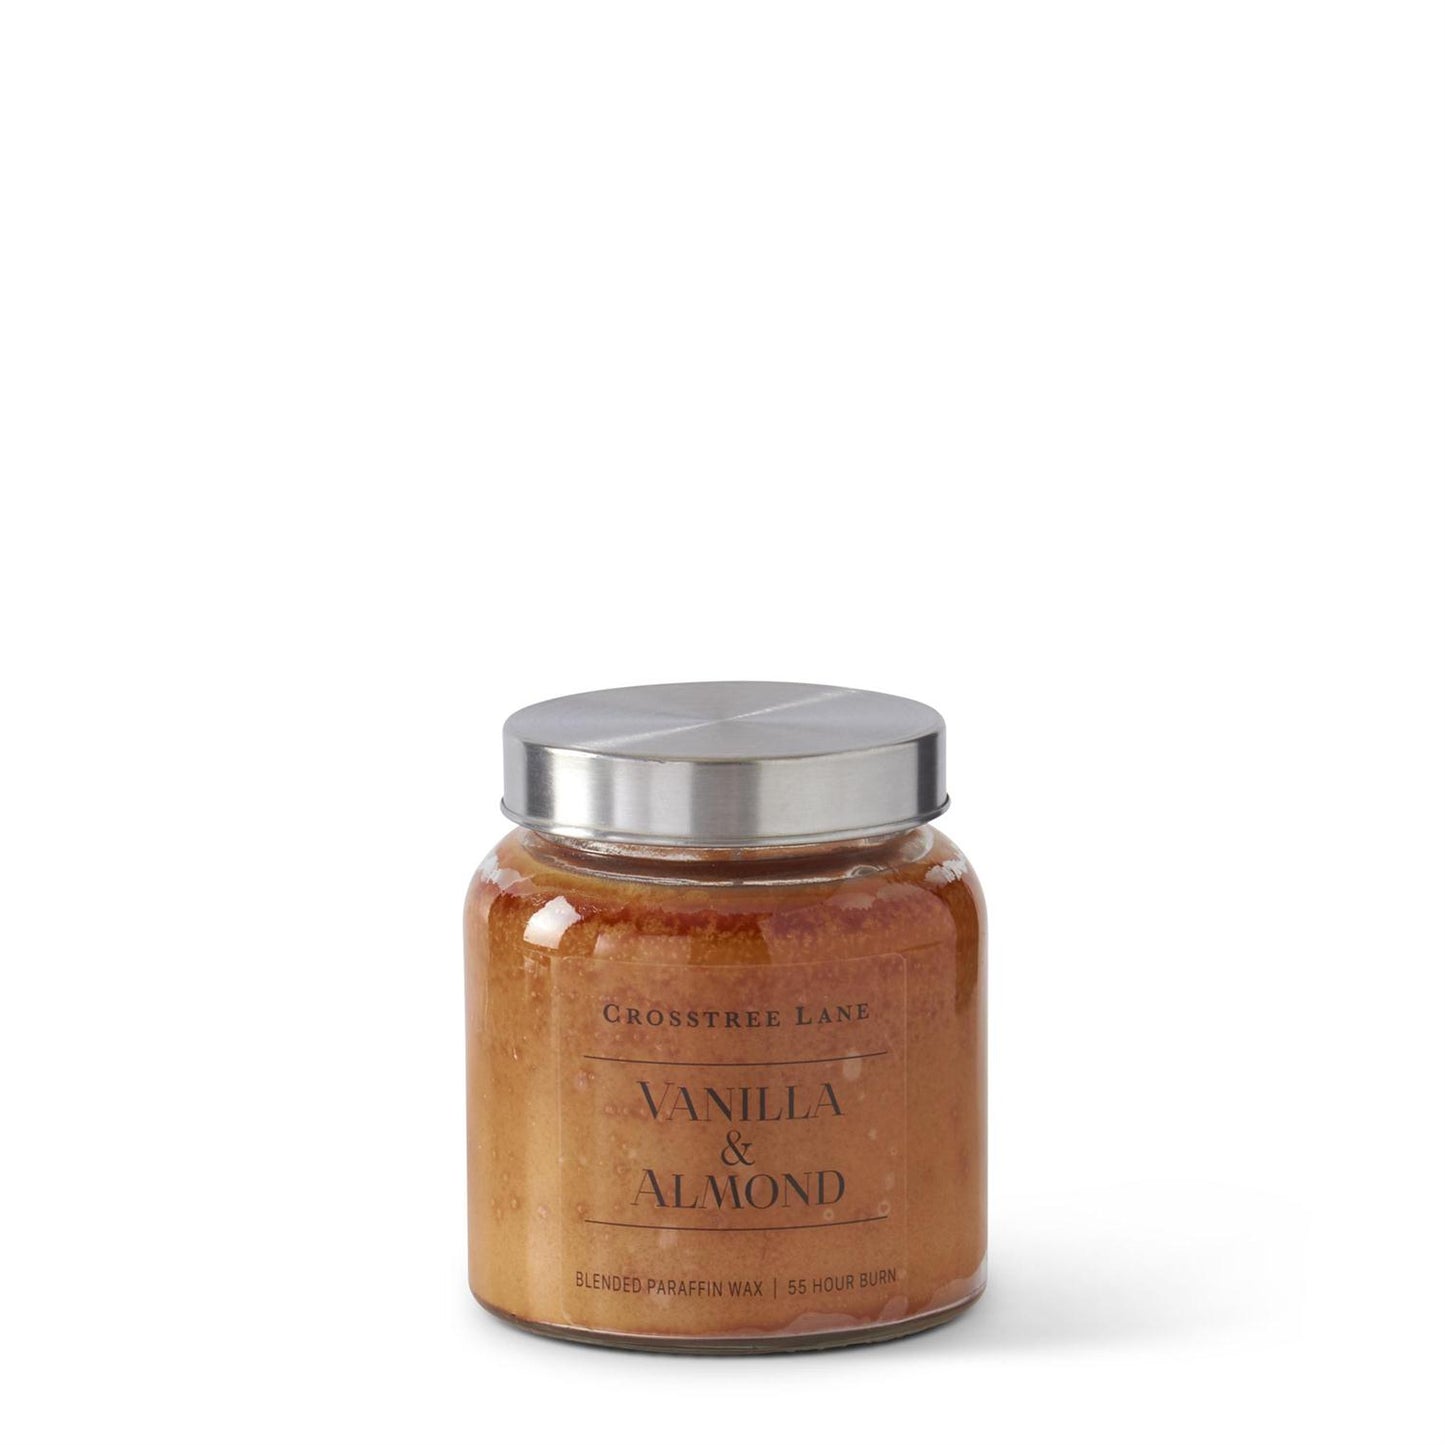 Crosstree Lane Candle 11 oz | Vanilla & Almond